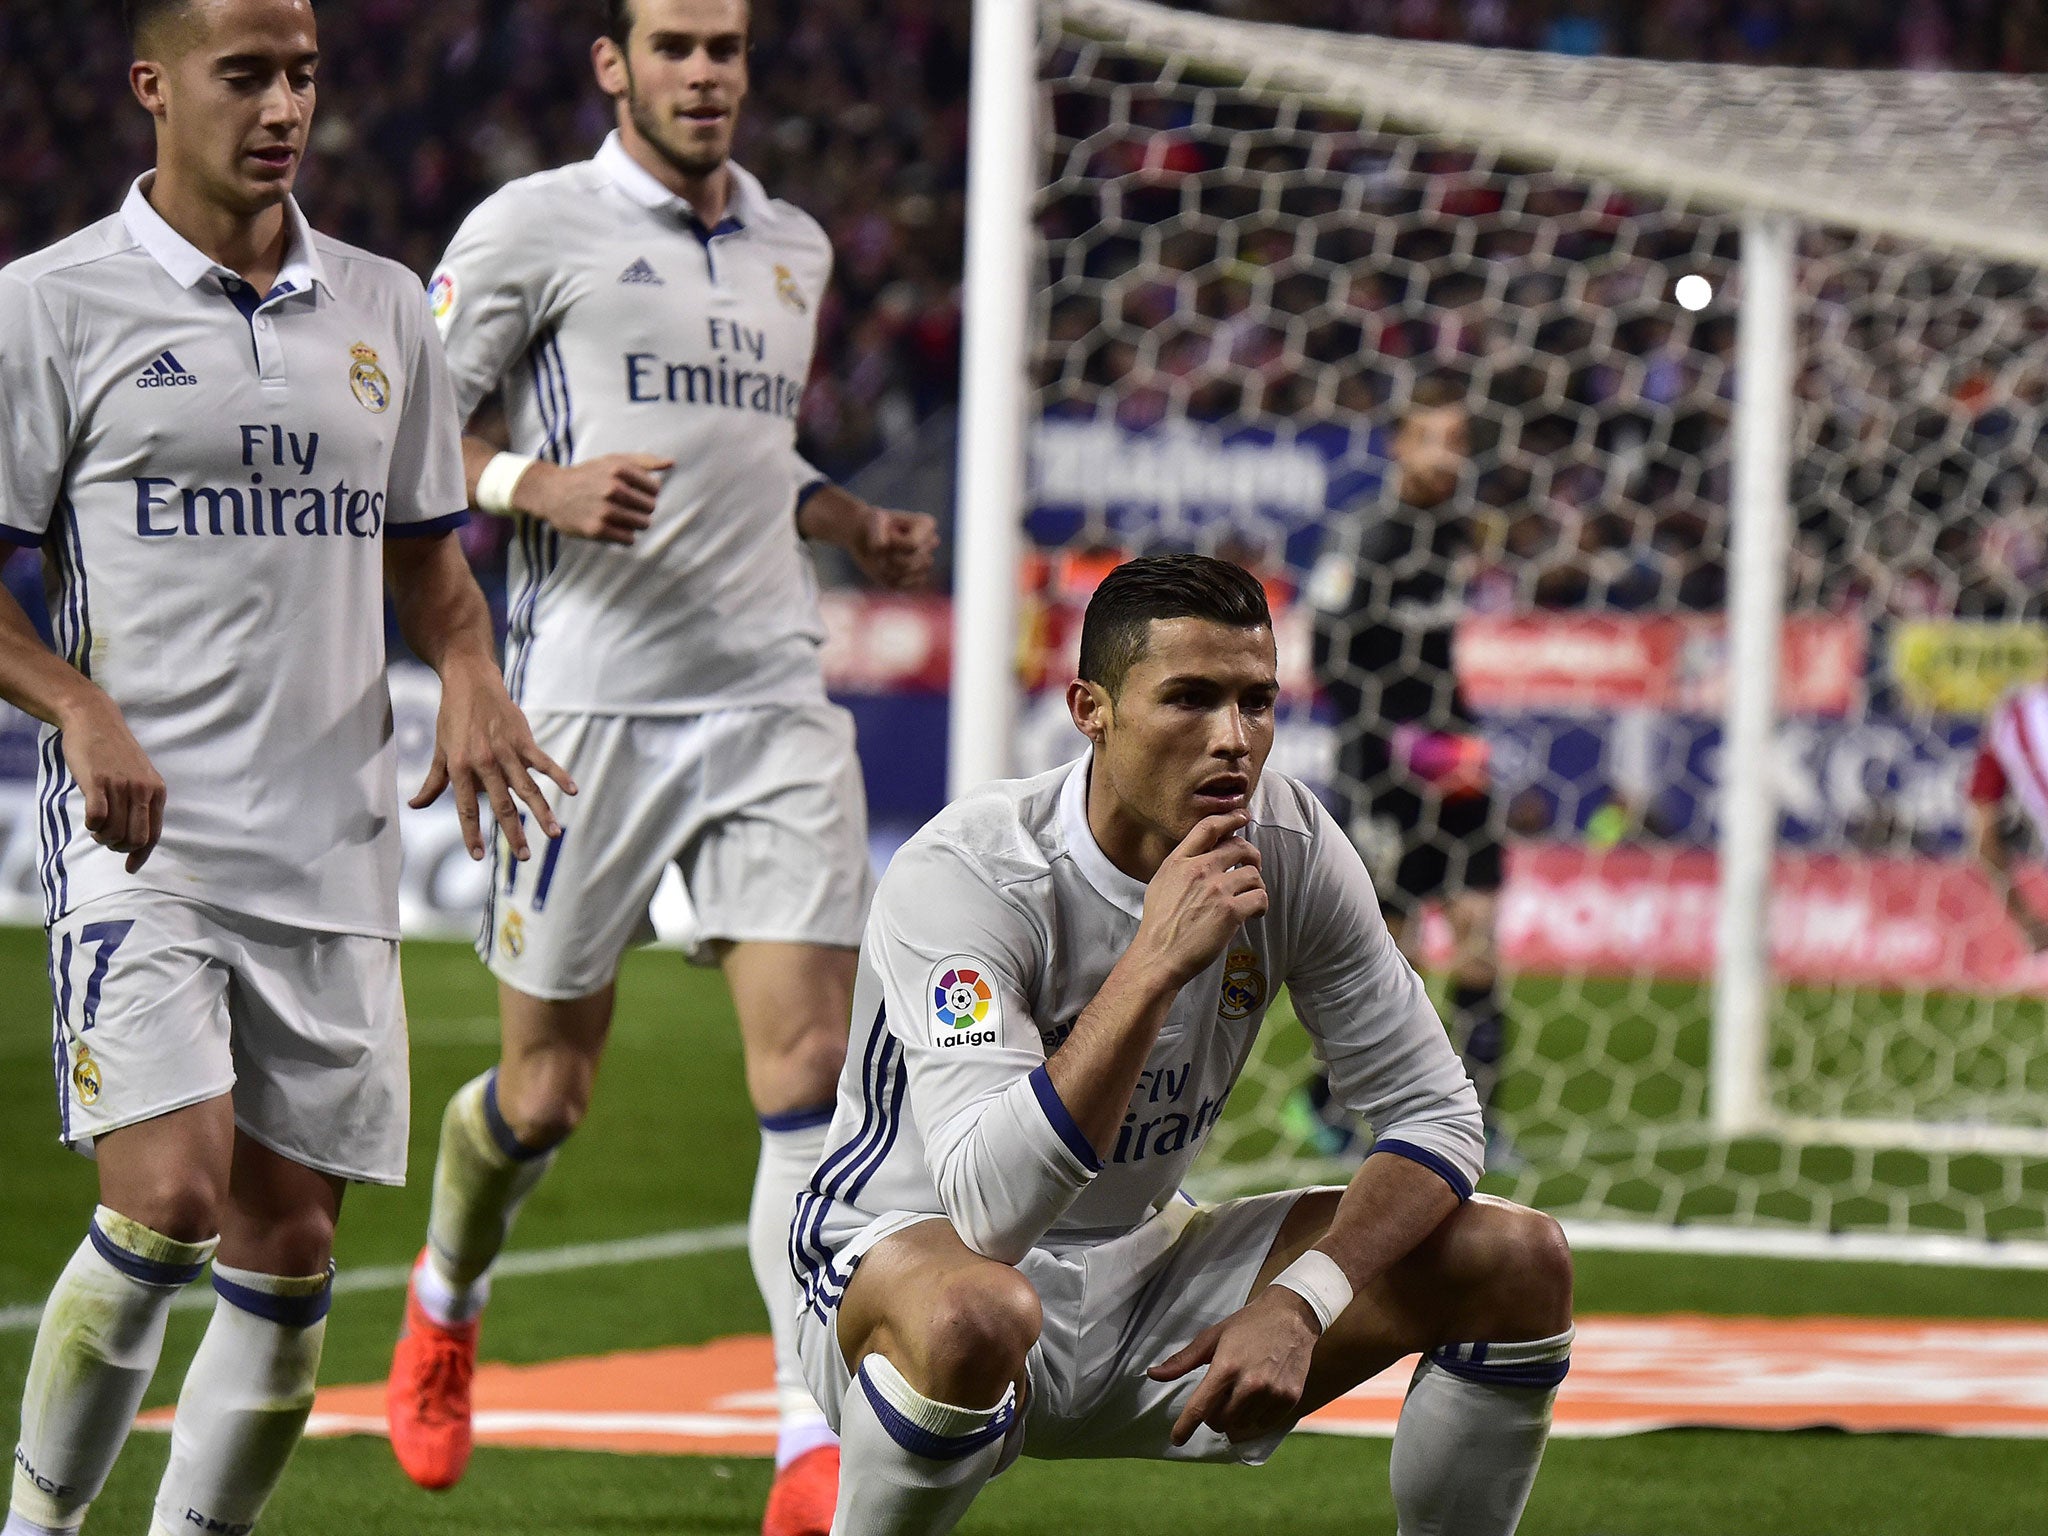 Ronaldo's new celebration sent the internet into overdrive